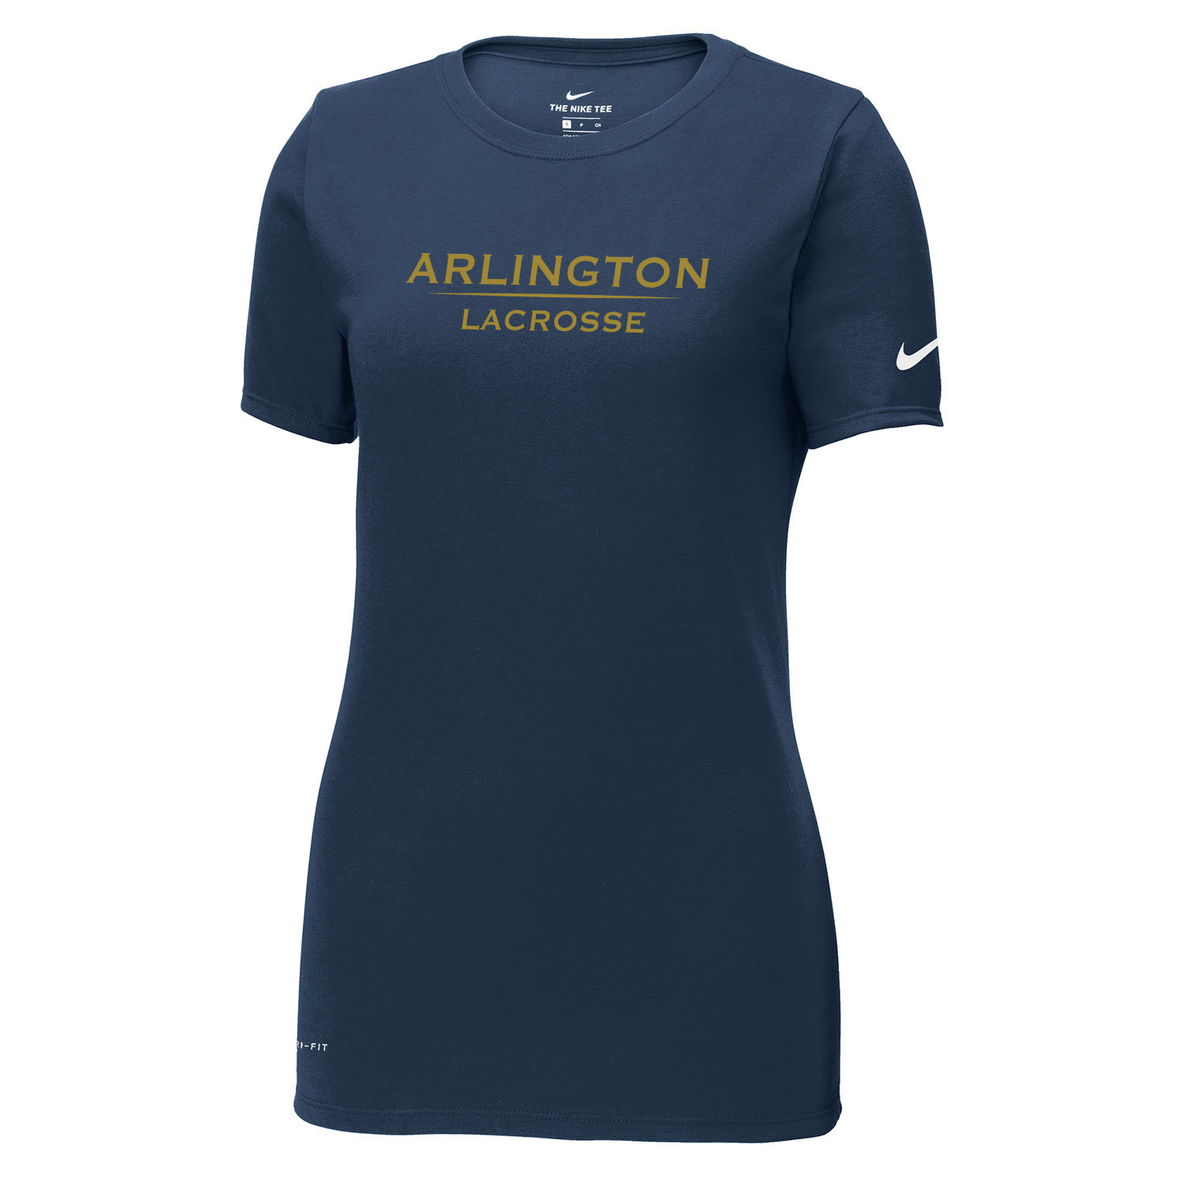 Arlington Lacrosse Nike Ladies Dri-FIT Tee